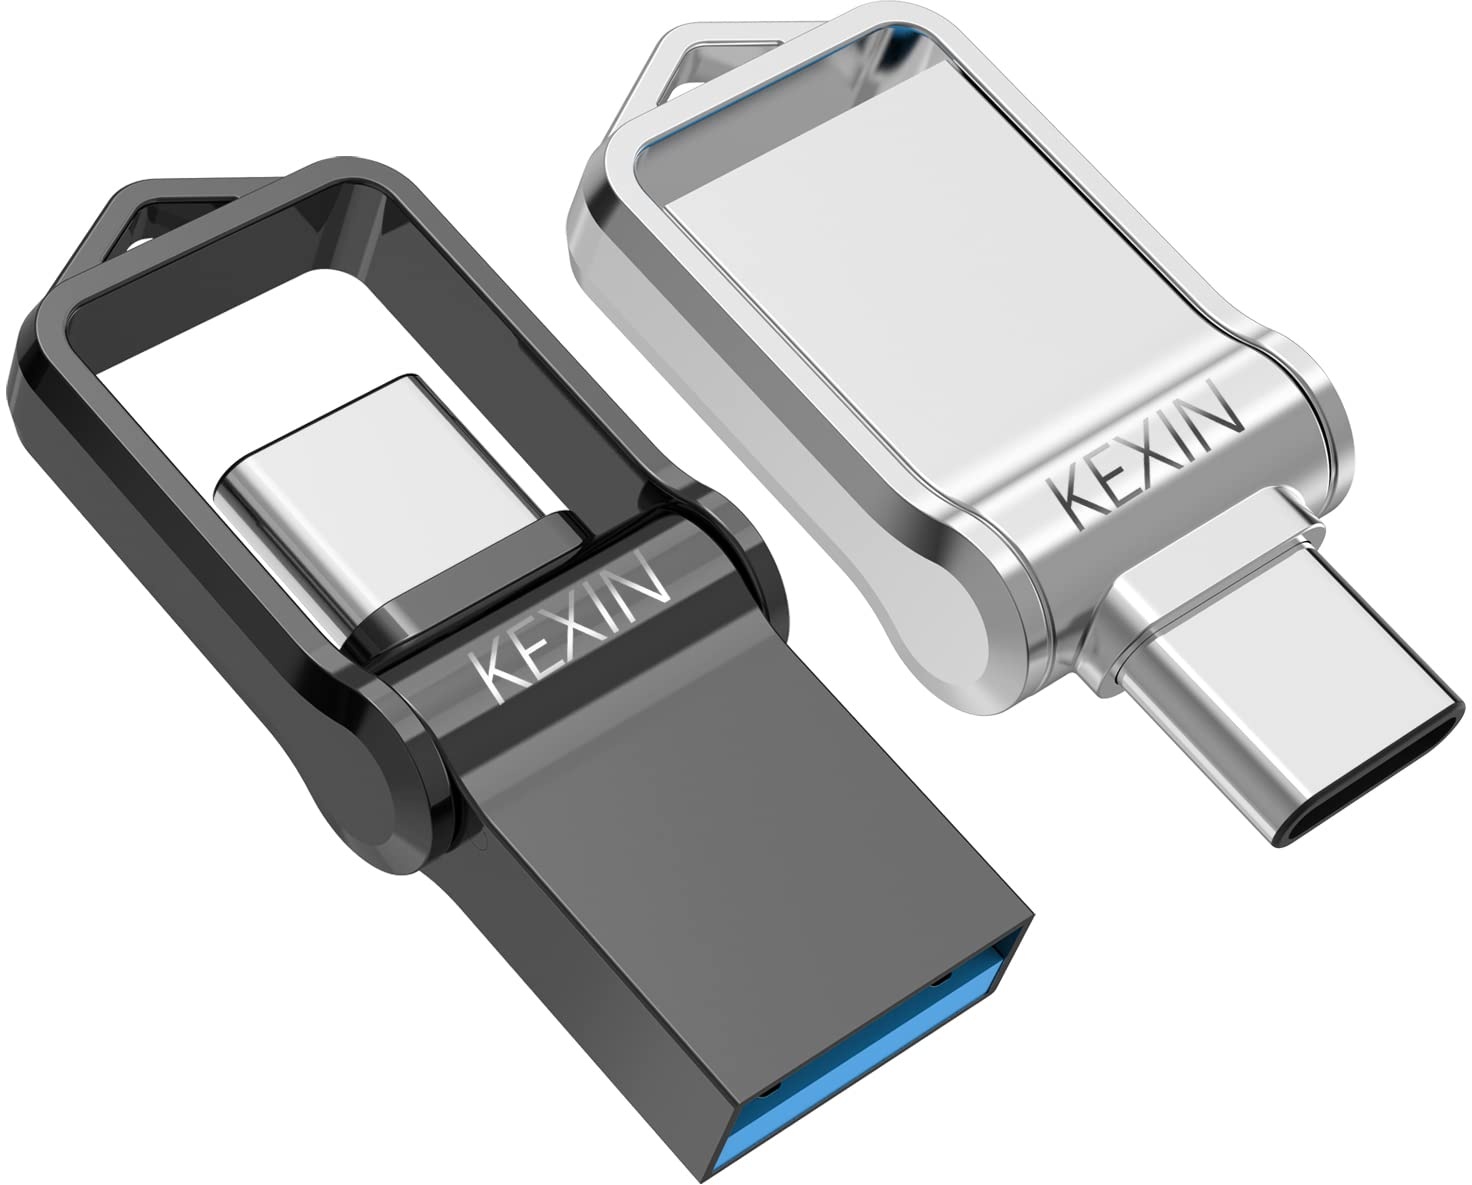 KEXIN 64GB USB C Stick 2 Stück Dual USB Stick 3.0 2-in-1 OTG Typ C Flash-Laufwerk Mini Speicherstick USB 3.0 Stick für USB C Handy Android, PC, Auto, TV (2er Pack, Schwarz Silver)